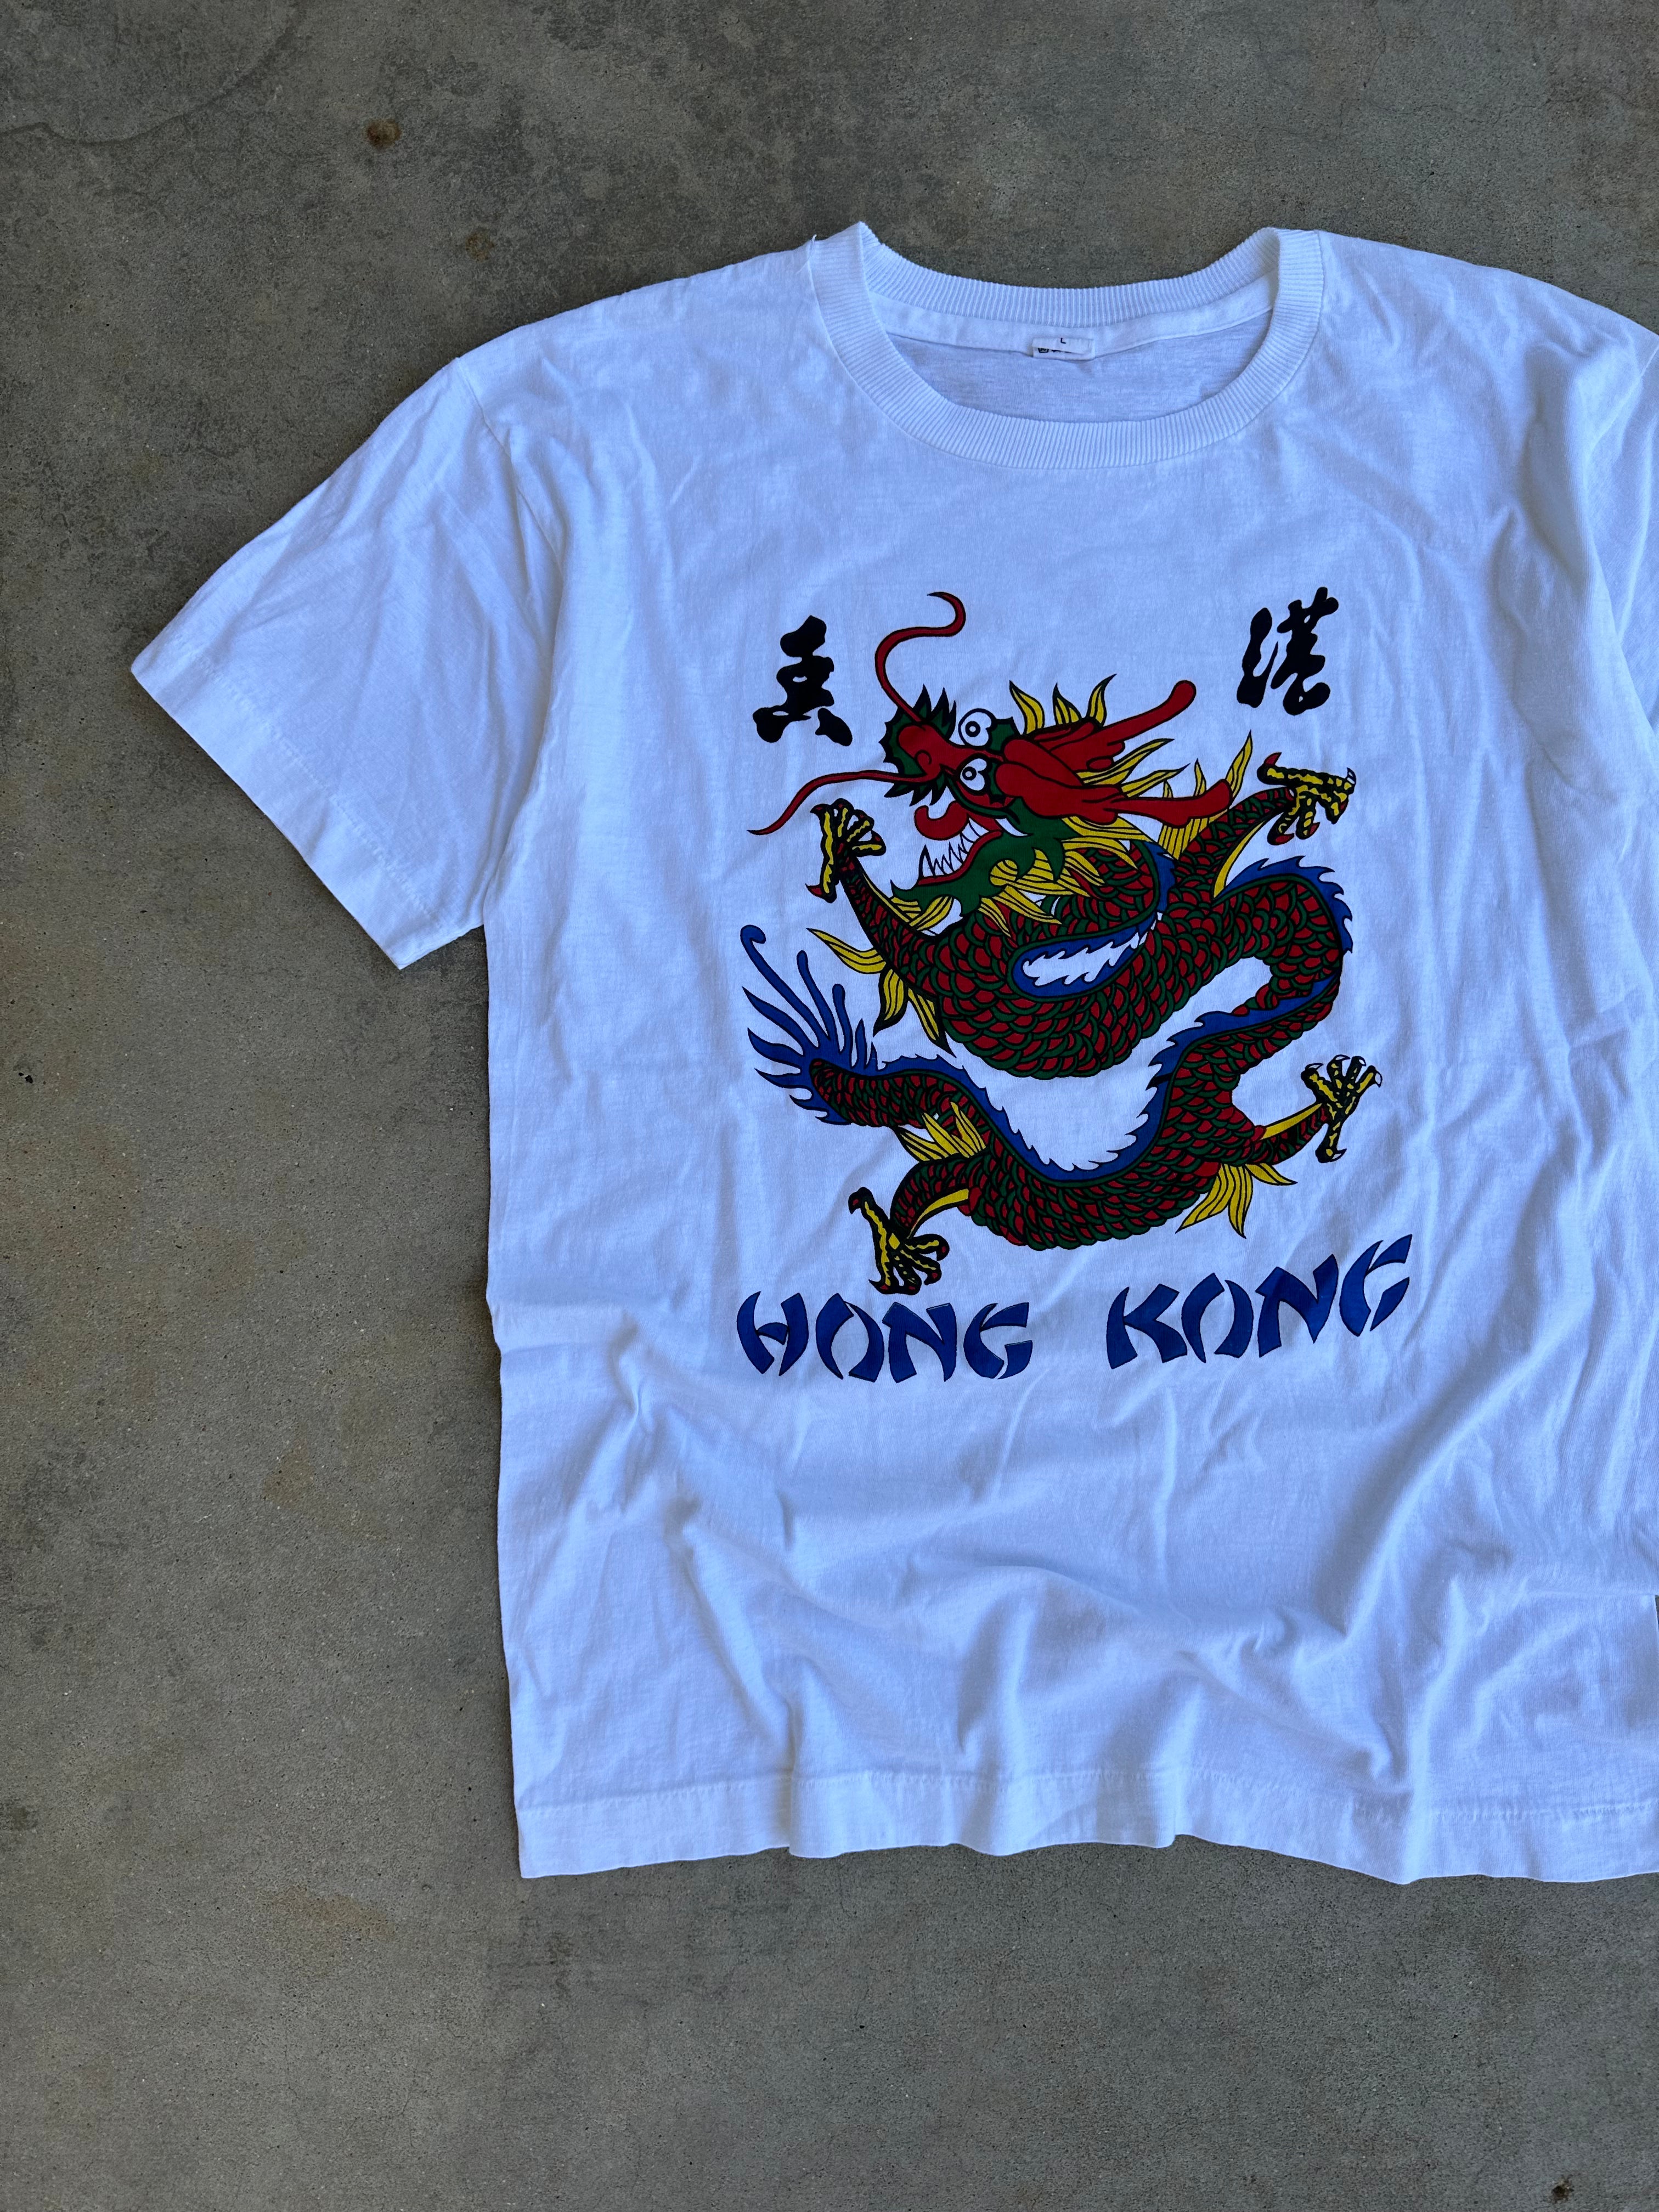 1980s Hong Kong T-Shirt (M)